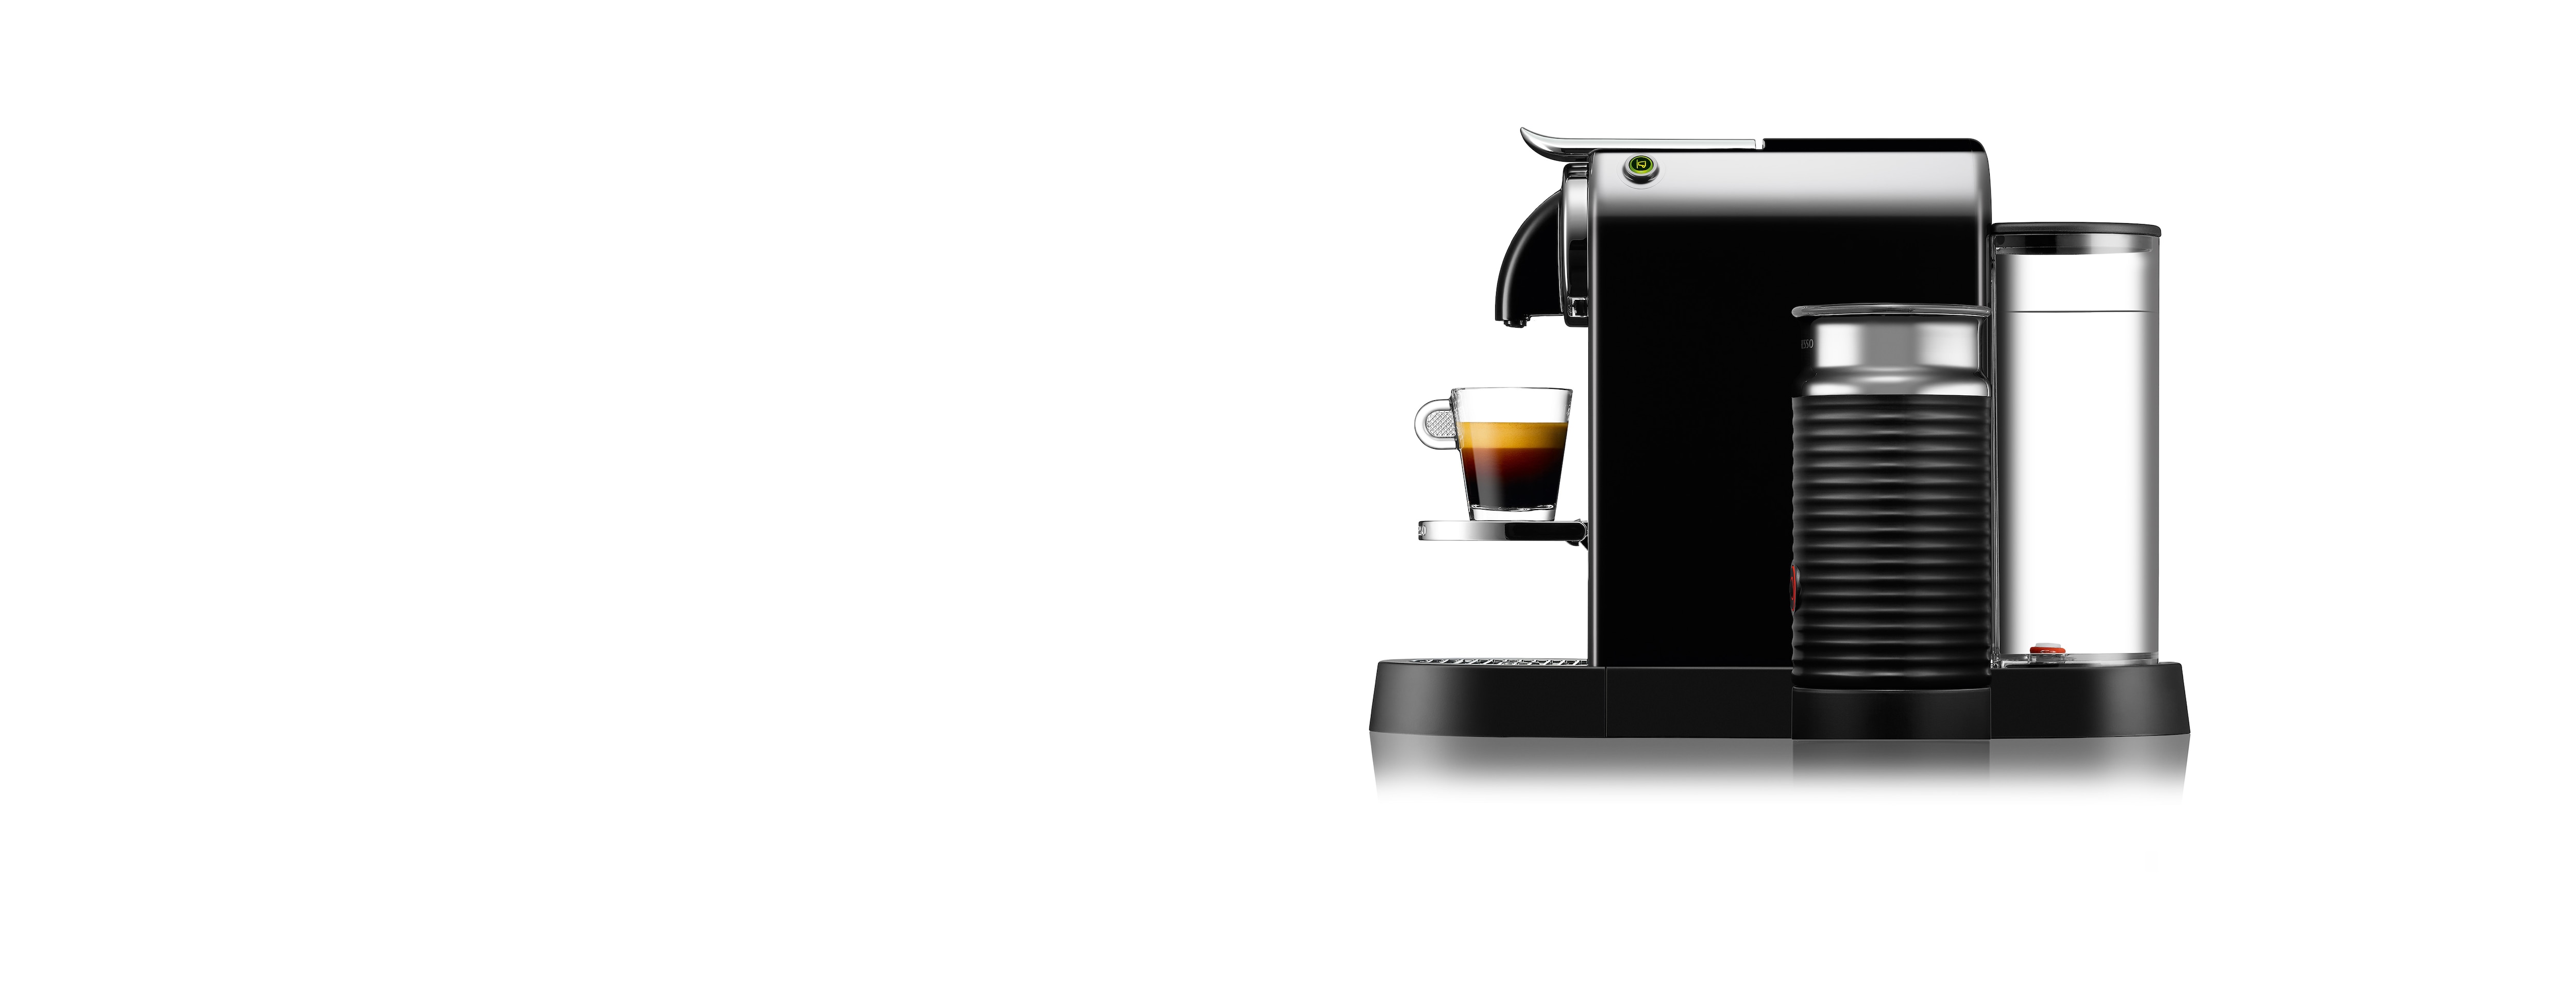 CitiZ&milk Limousine Black| Machine | Nespresso Canada